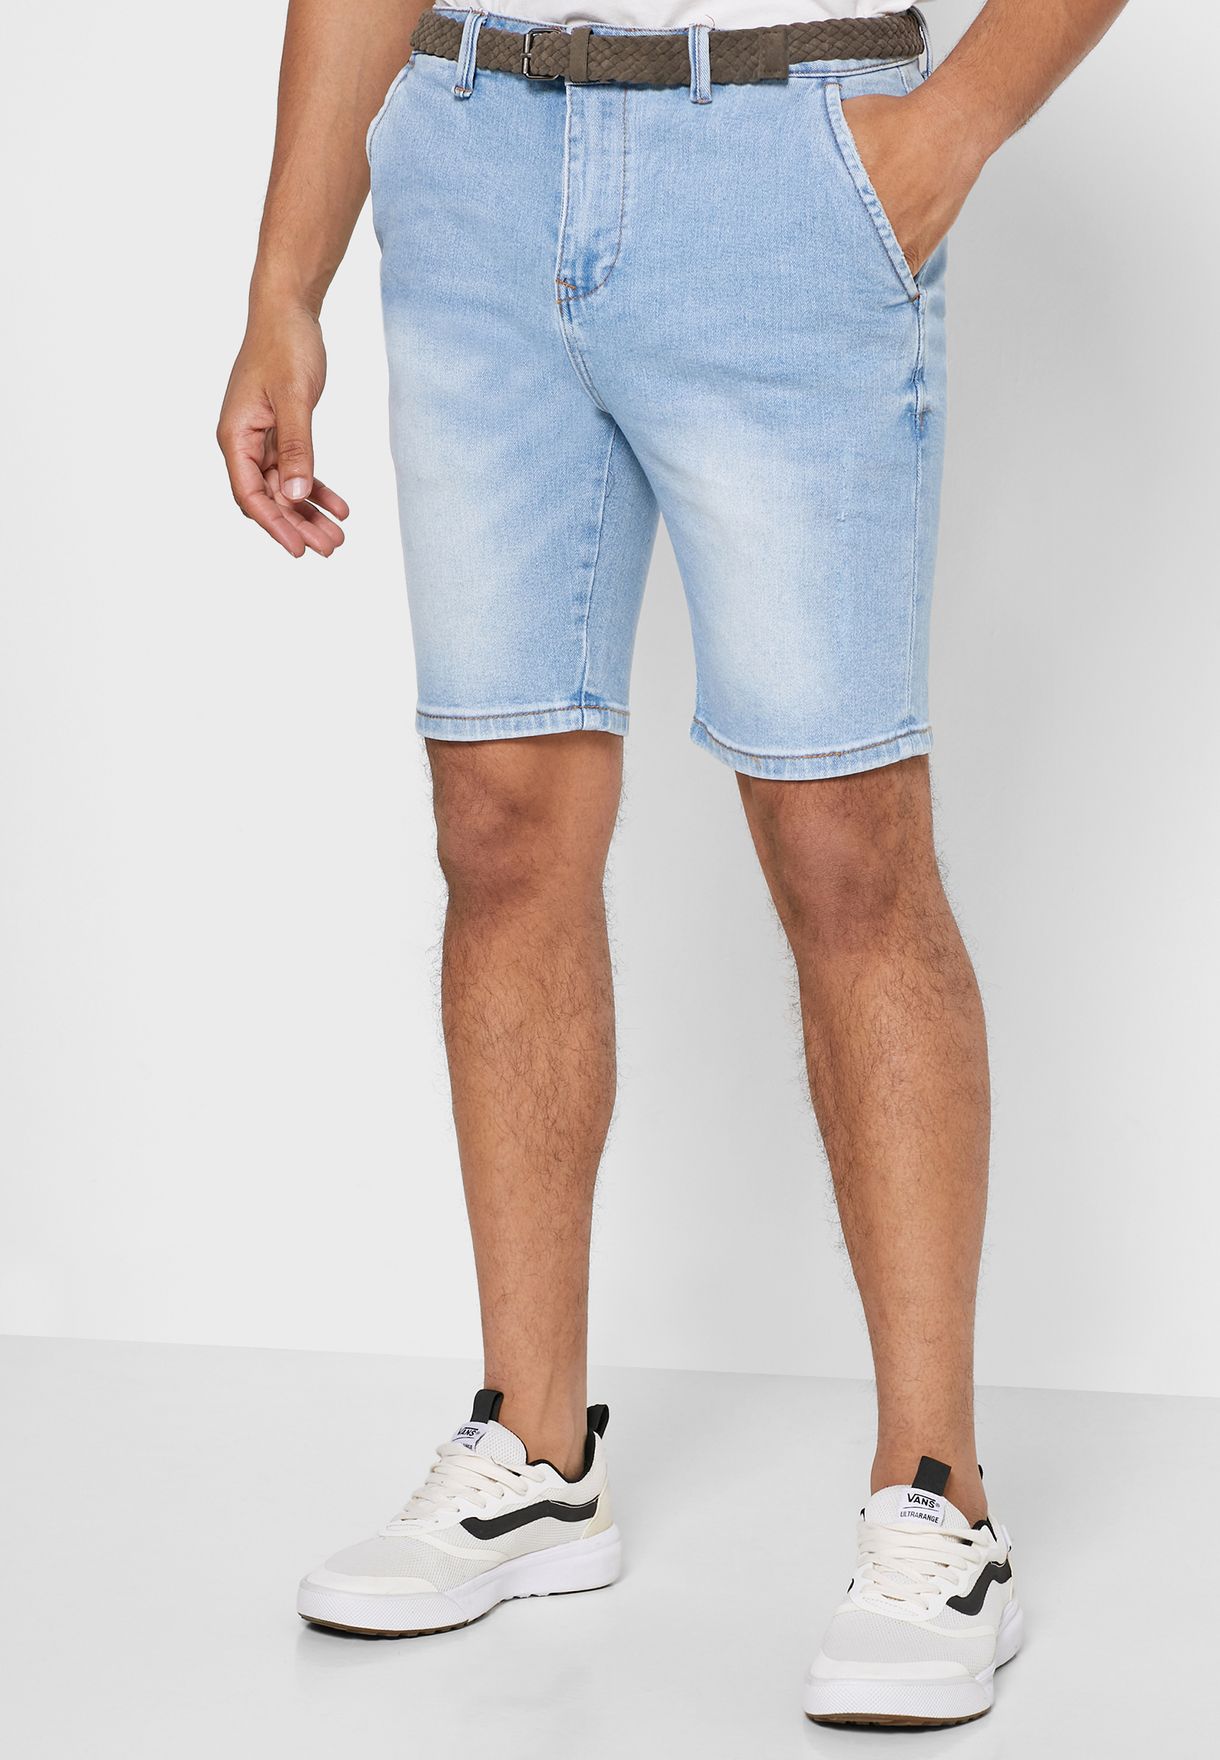 light wash jean shorts mens